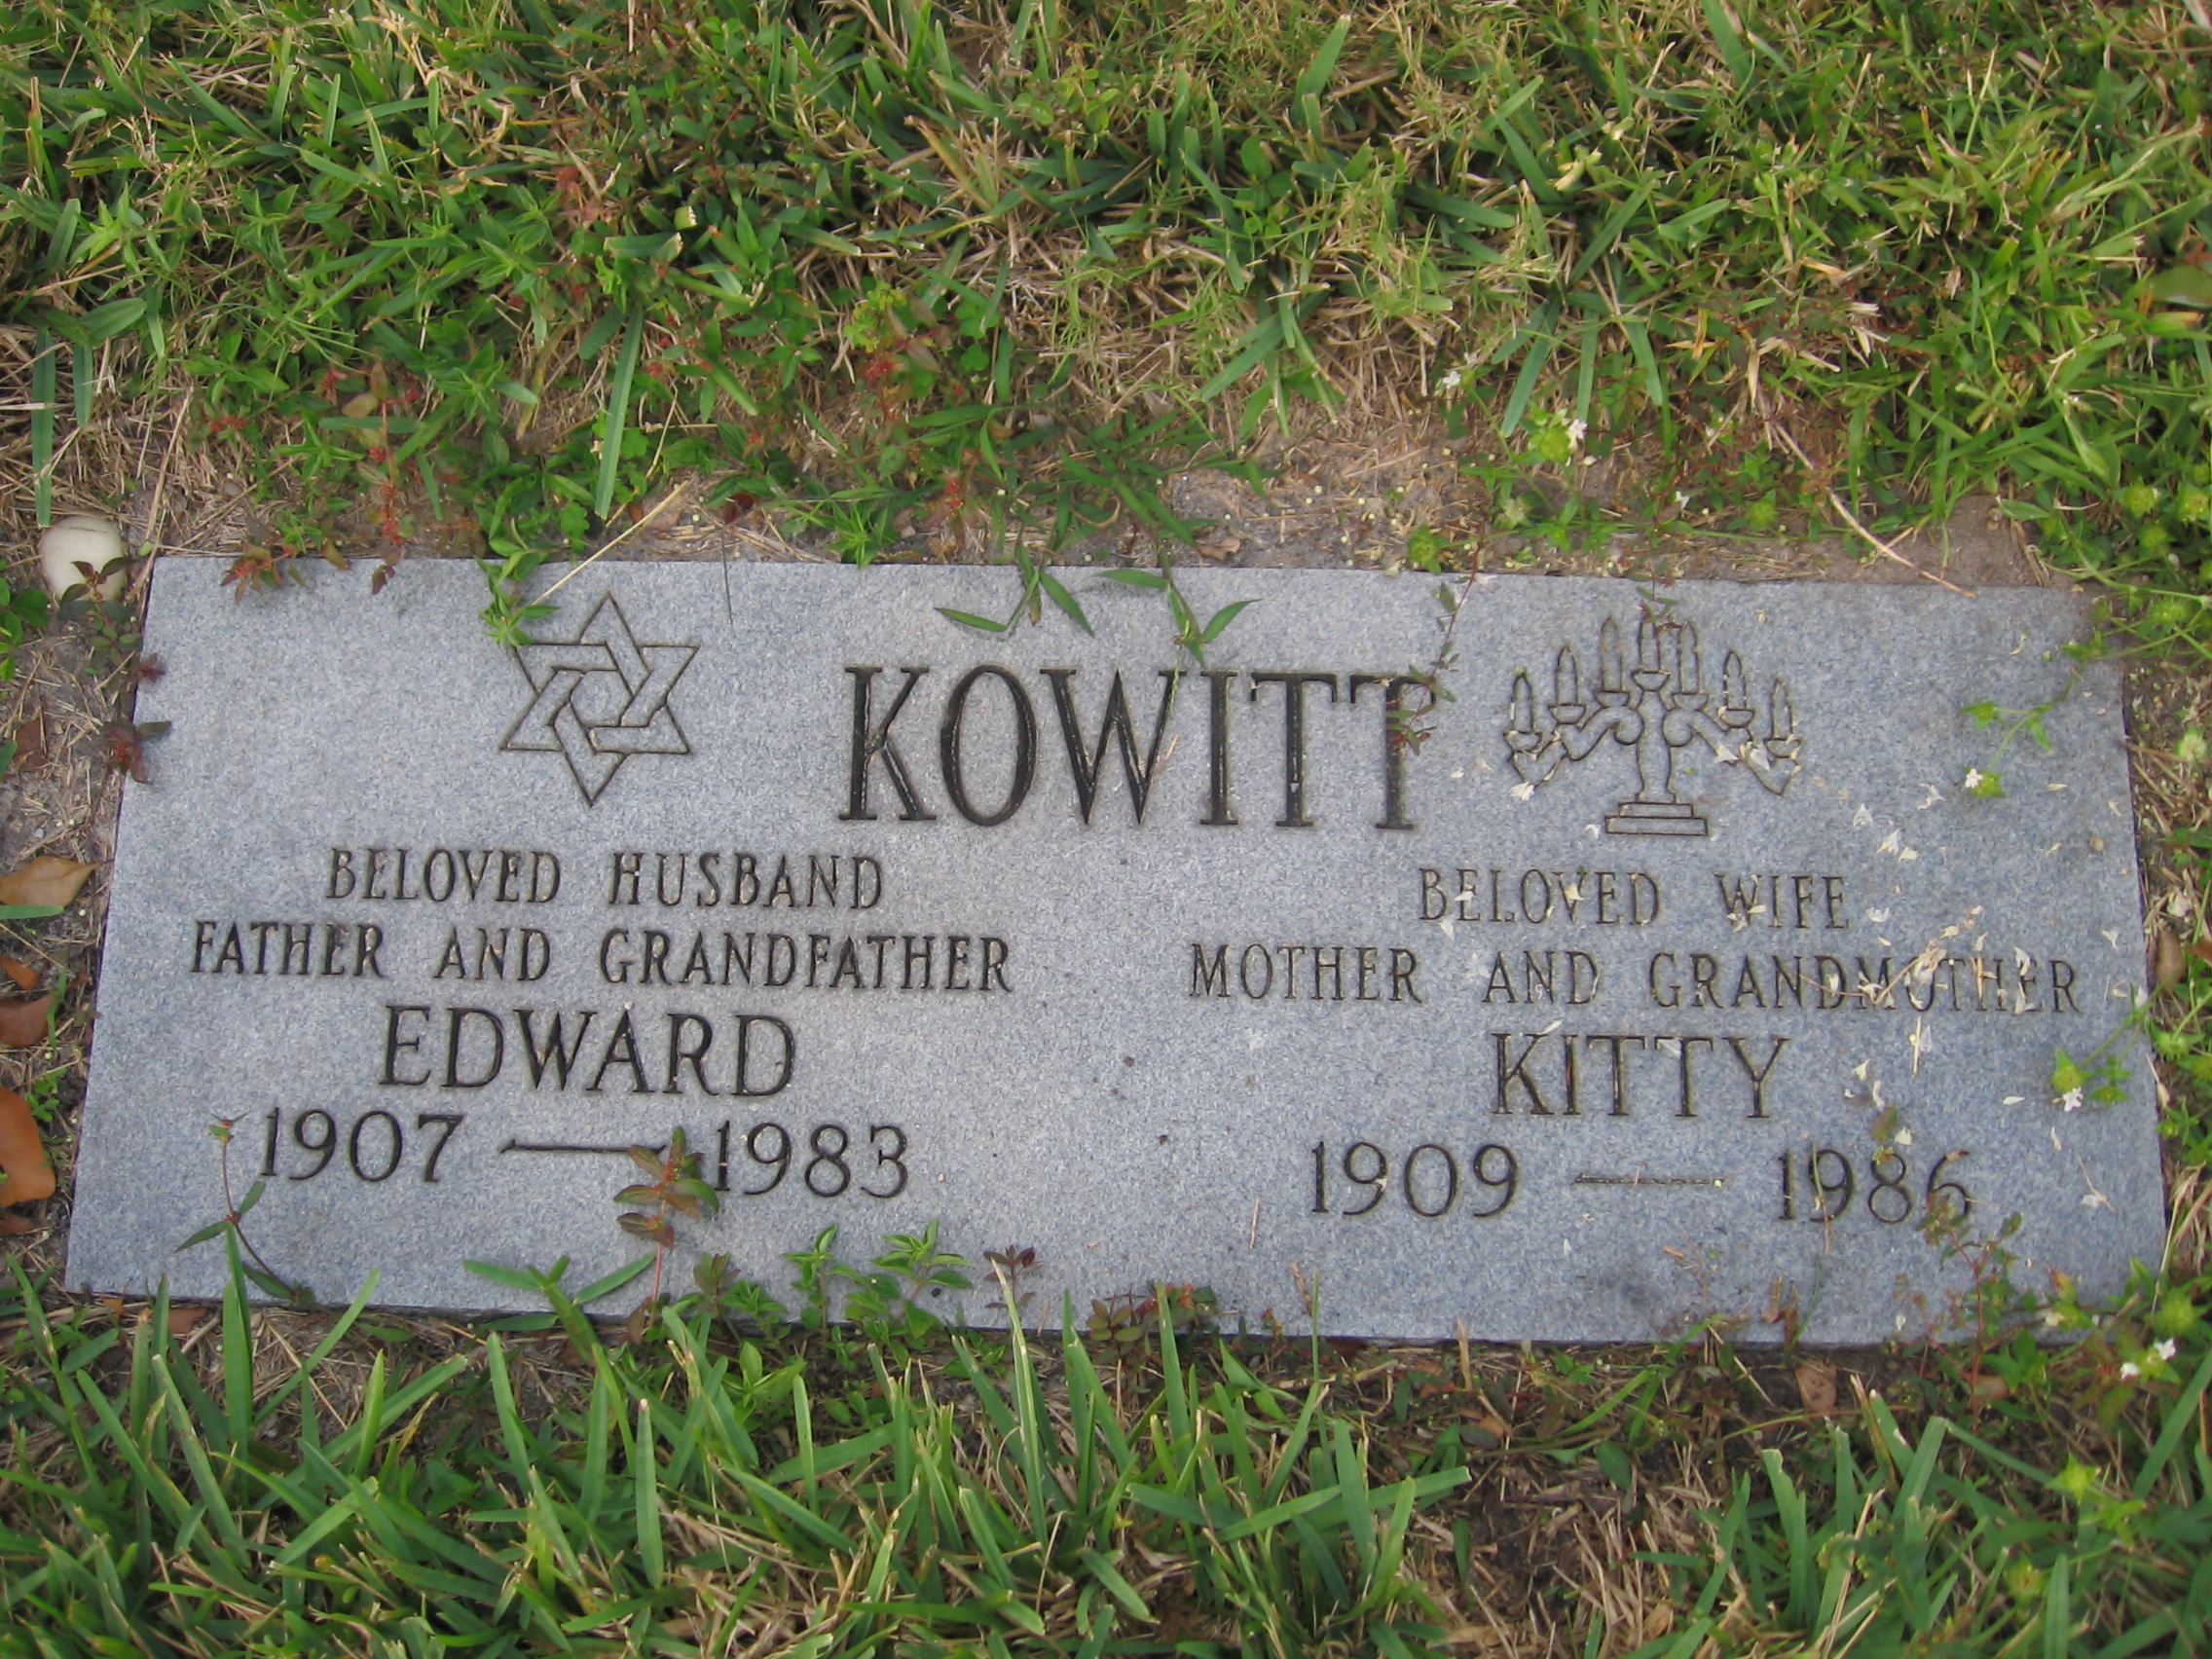 Edward Kowitt